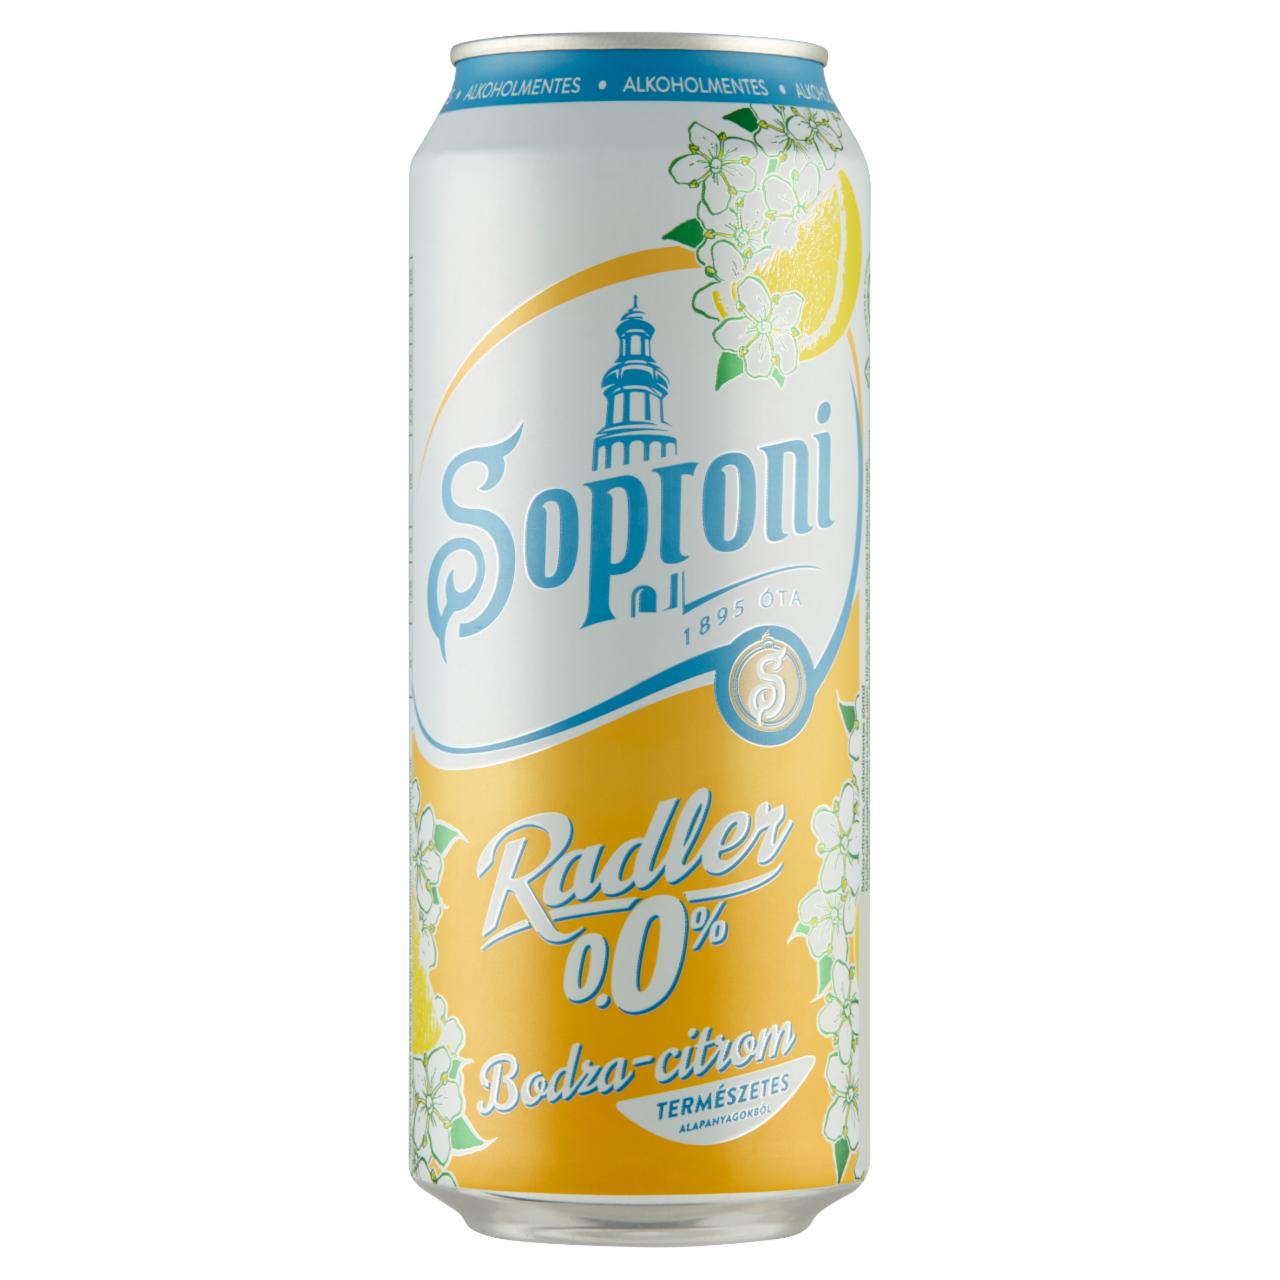 Képek - Soproni Radler bodza-citromos alkoholmentes sörital 0,5 l 